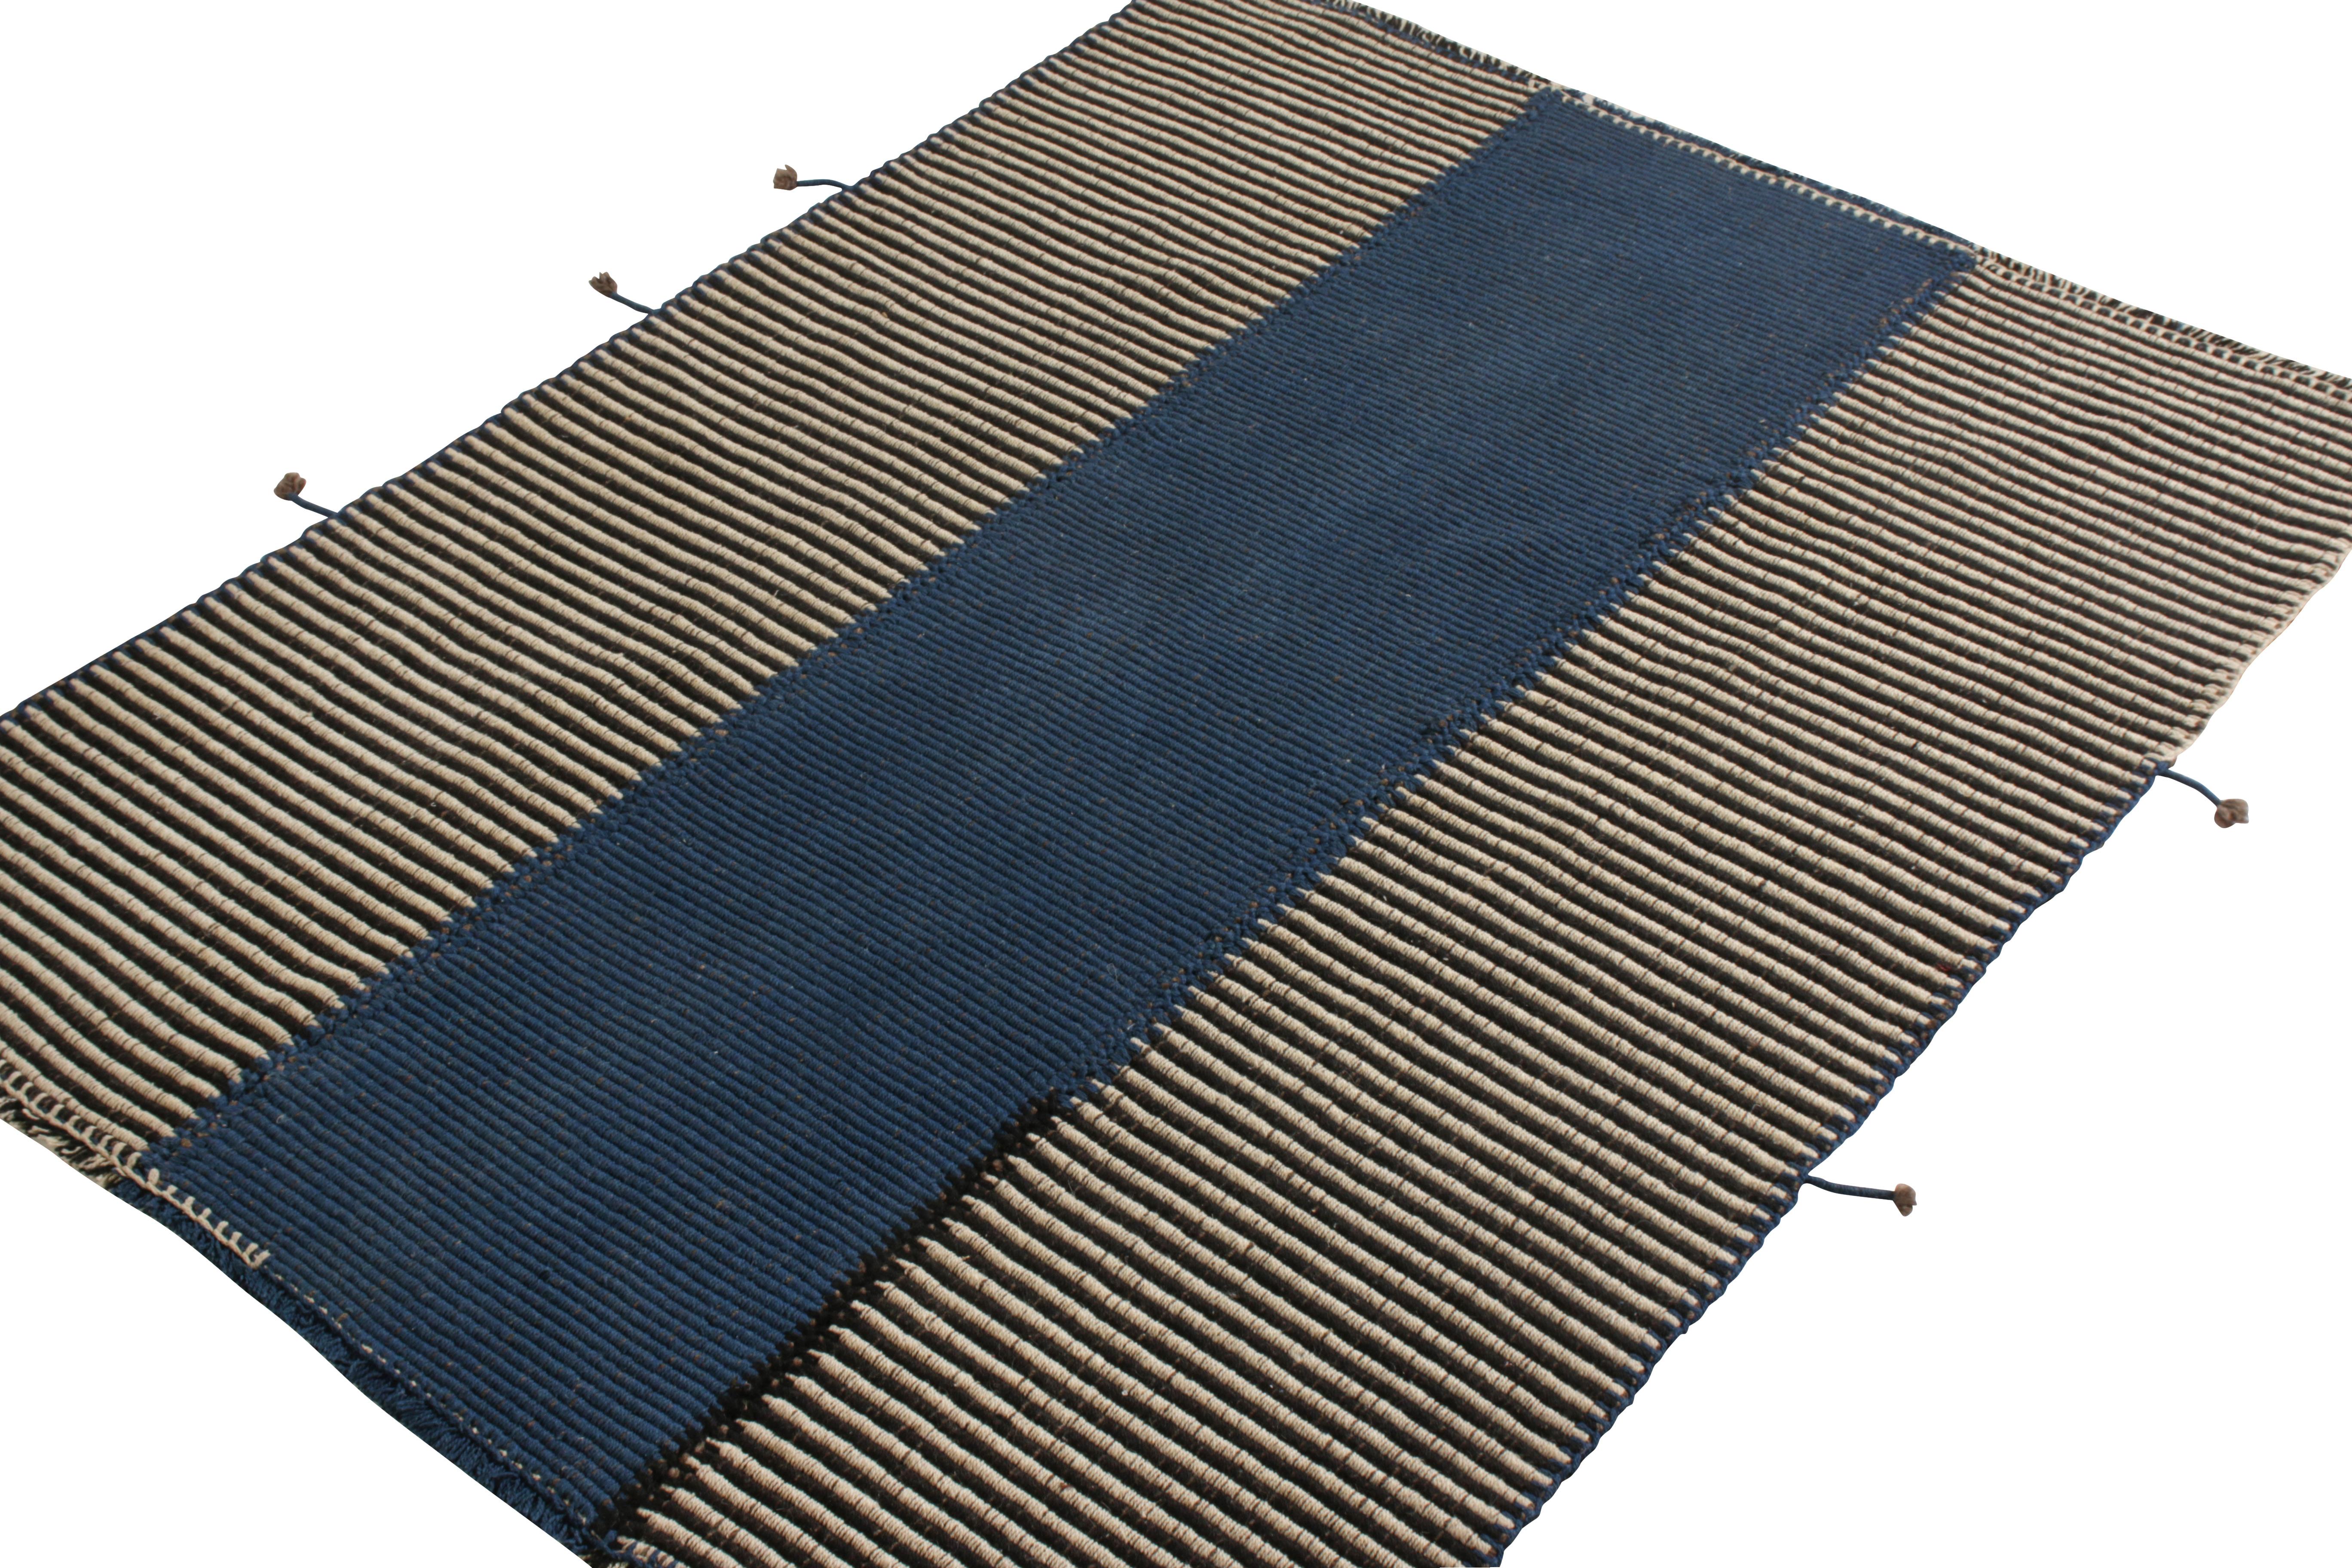 Other Rug & Kilim’s Modern Paneled Kilim Rug in Blue and Brown Stripe Pattern For Sale